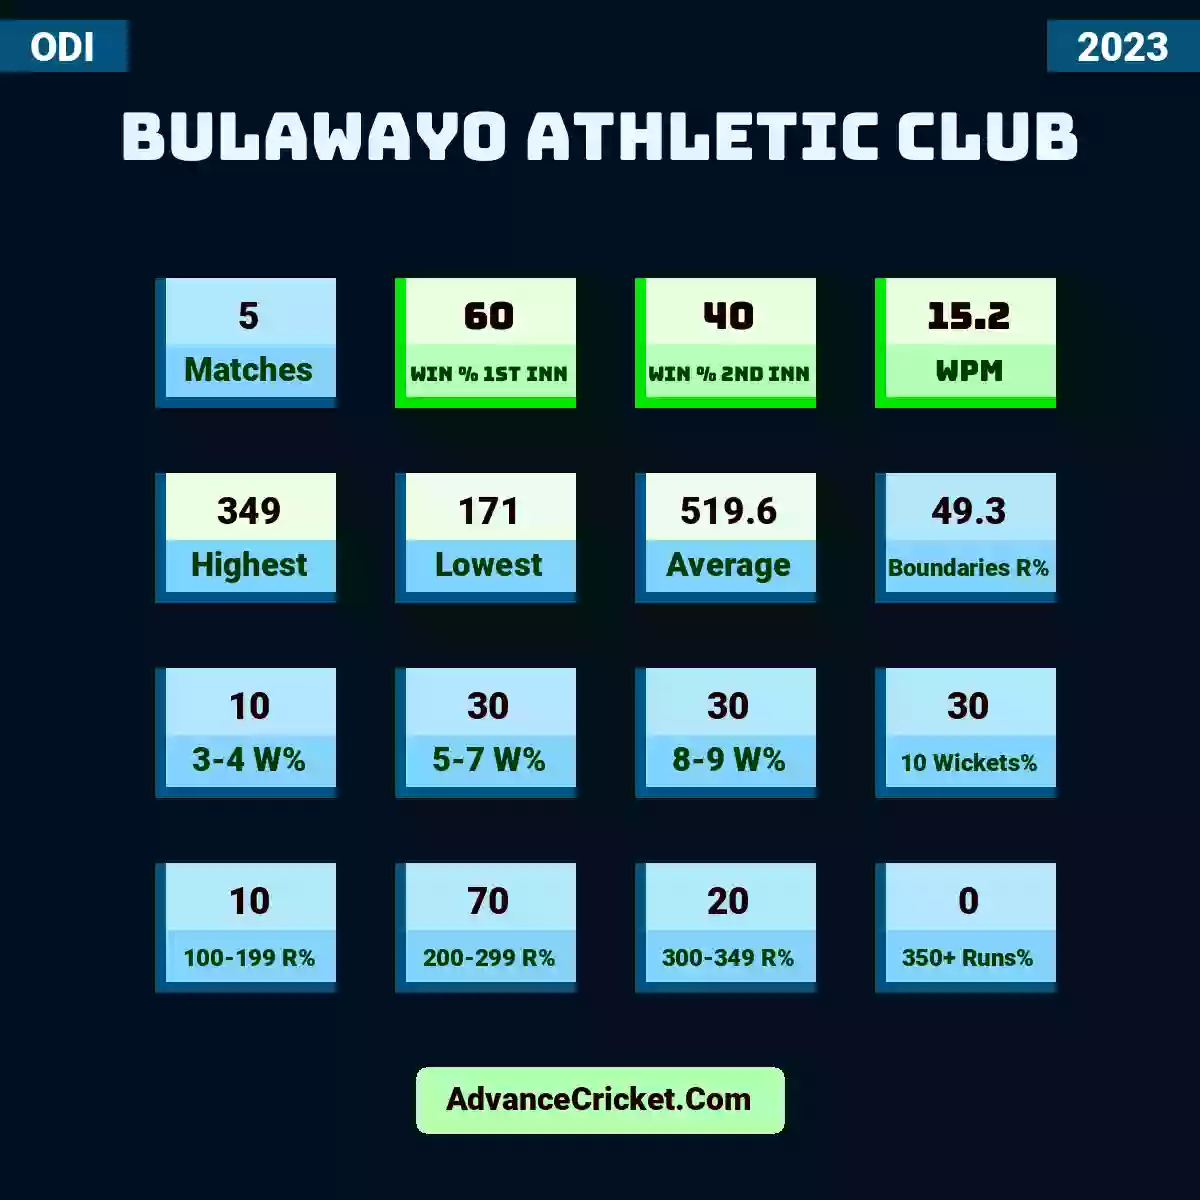 Image showing Bulawayo Athletic Club with Matches: 5, Win % 1st Inn: 60, Win % 2nd Inn: 40, WPM: 15.2, Highest: 349, Lowest: 171, Average: 519.6, Boundaries R%: 49.3, 3-4 W%: 10, 5-7 W%: 30, 8-9 W%: 30, 10 Wickets%: 30, 100-199 R%: 10, 200-299 R%: 70, 300-349 R%: 20, 350+ Runs%: 0.